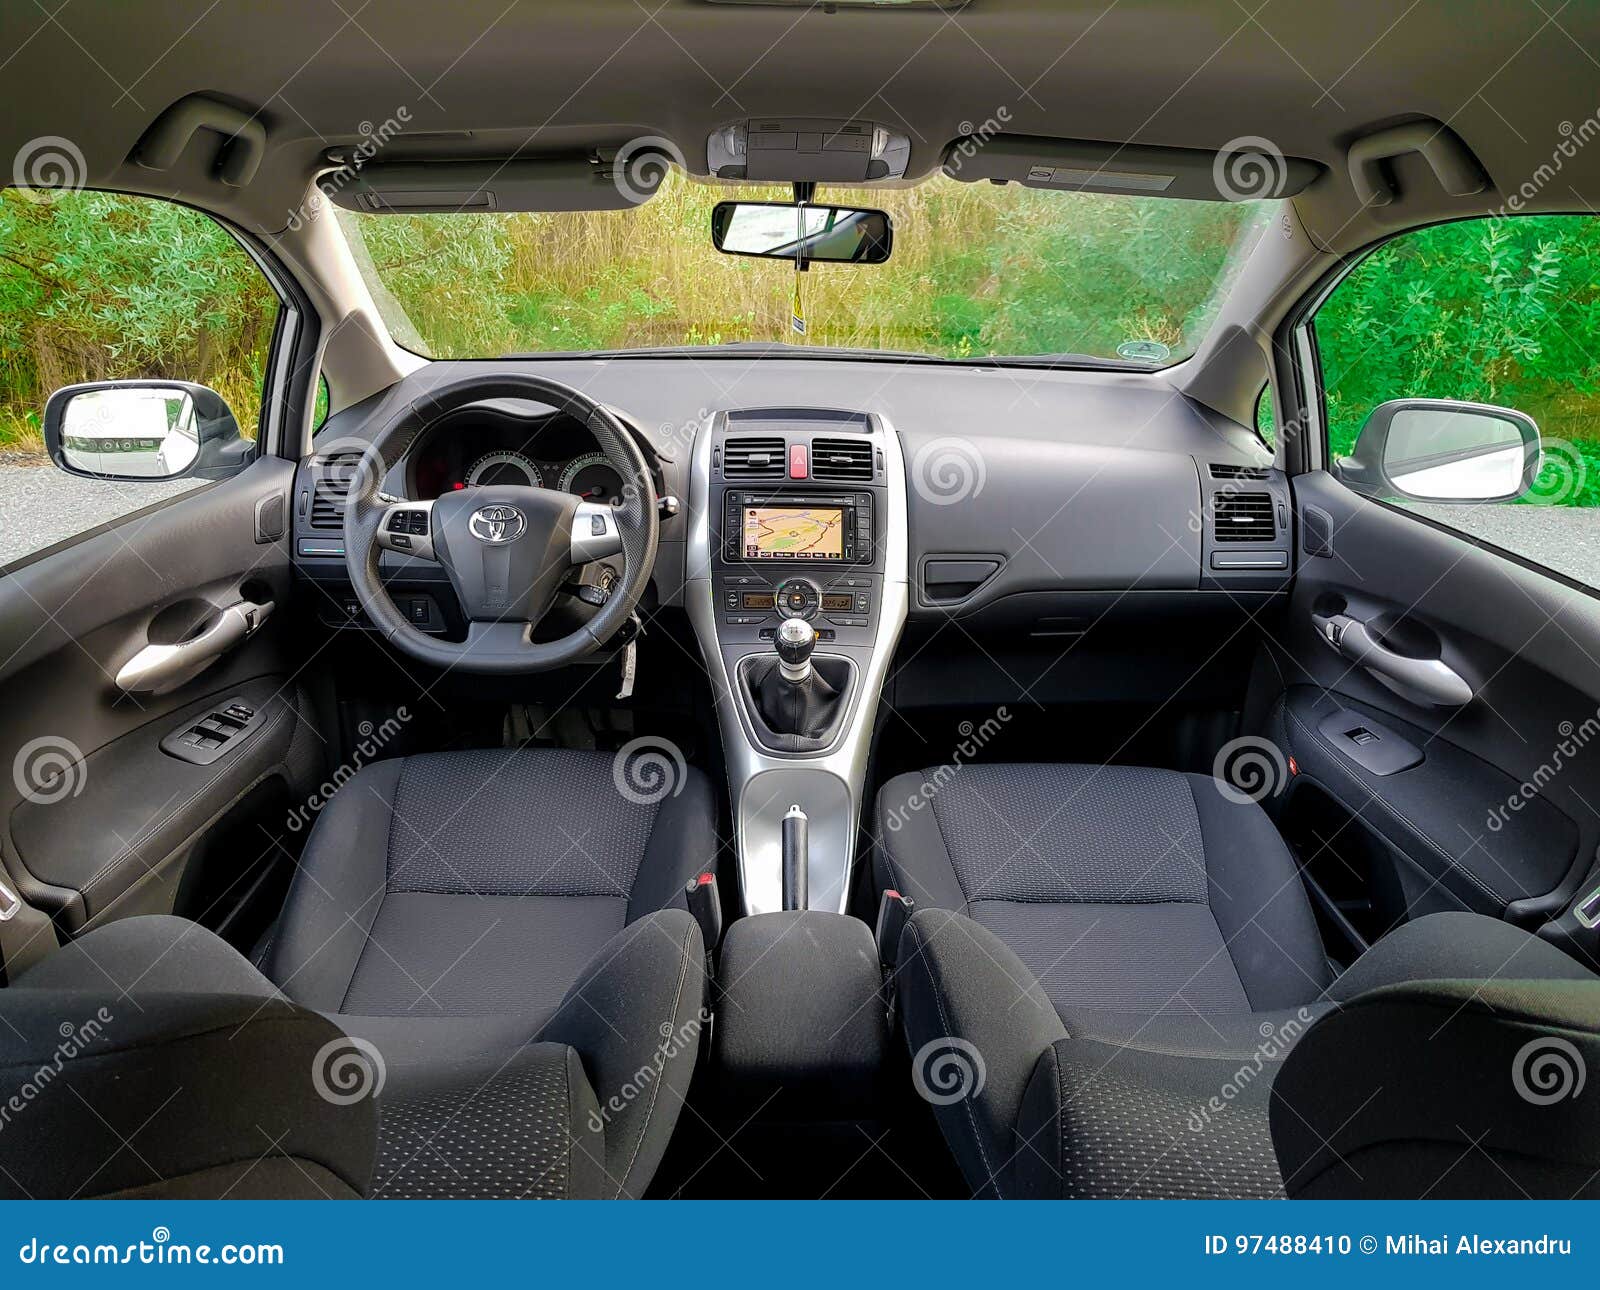 Black Interior Of Japanese Car With Big Navigation Display